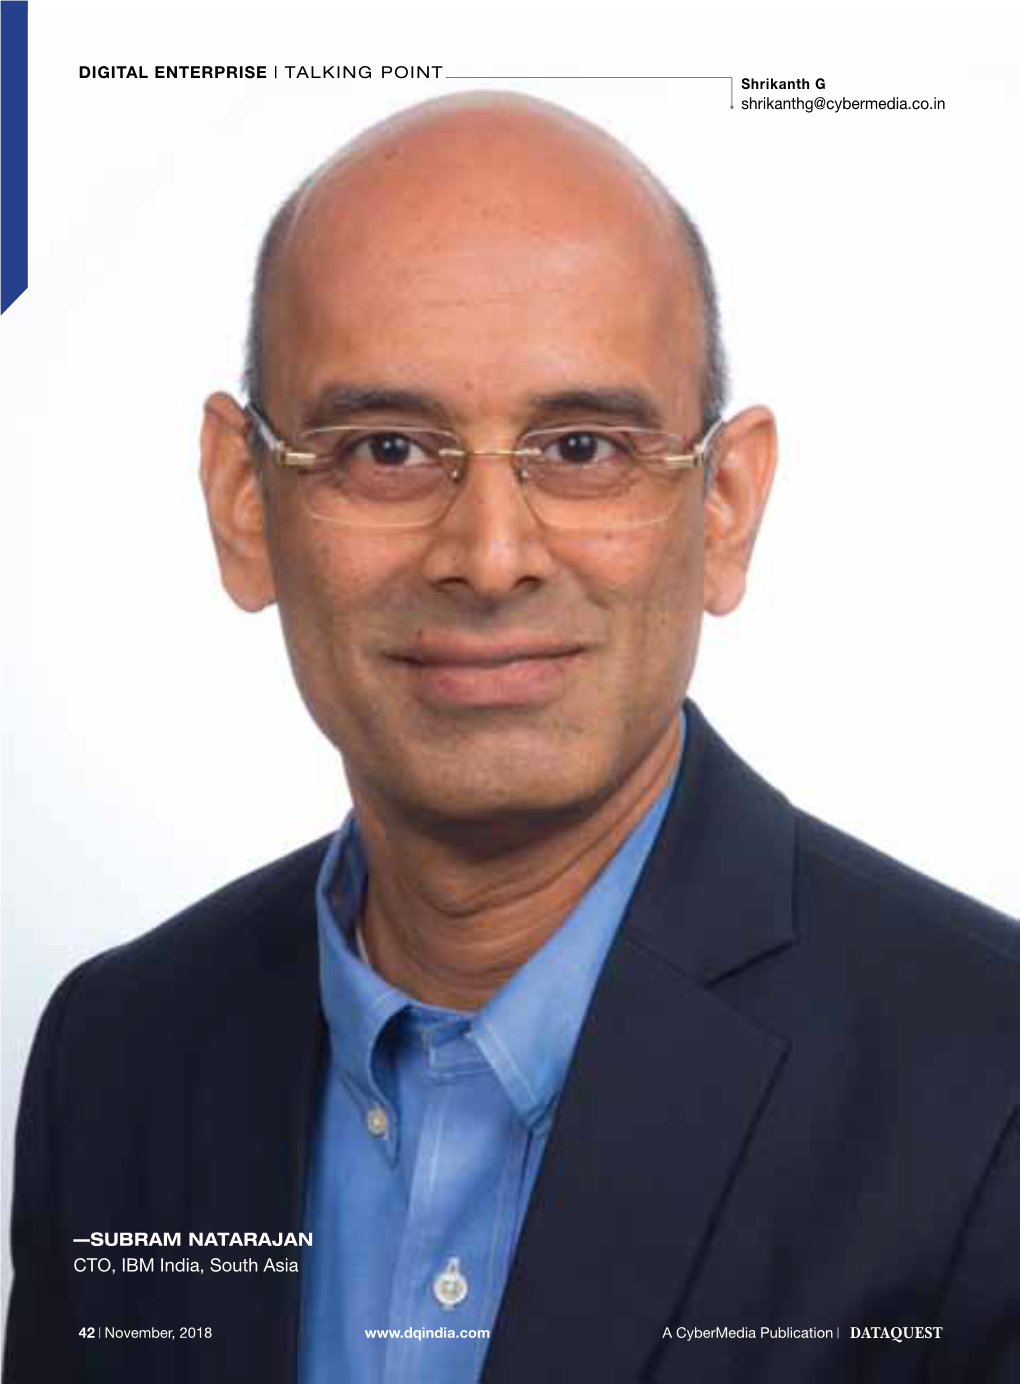 —Subram Natarajan CTO, IBM India, South Asia